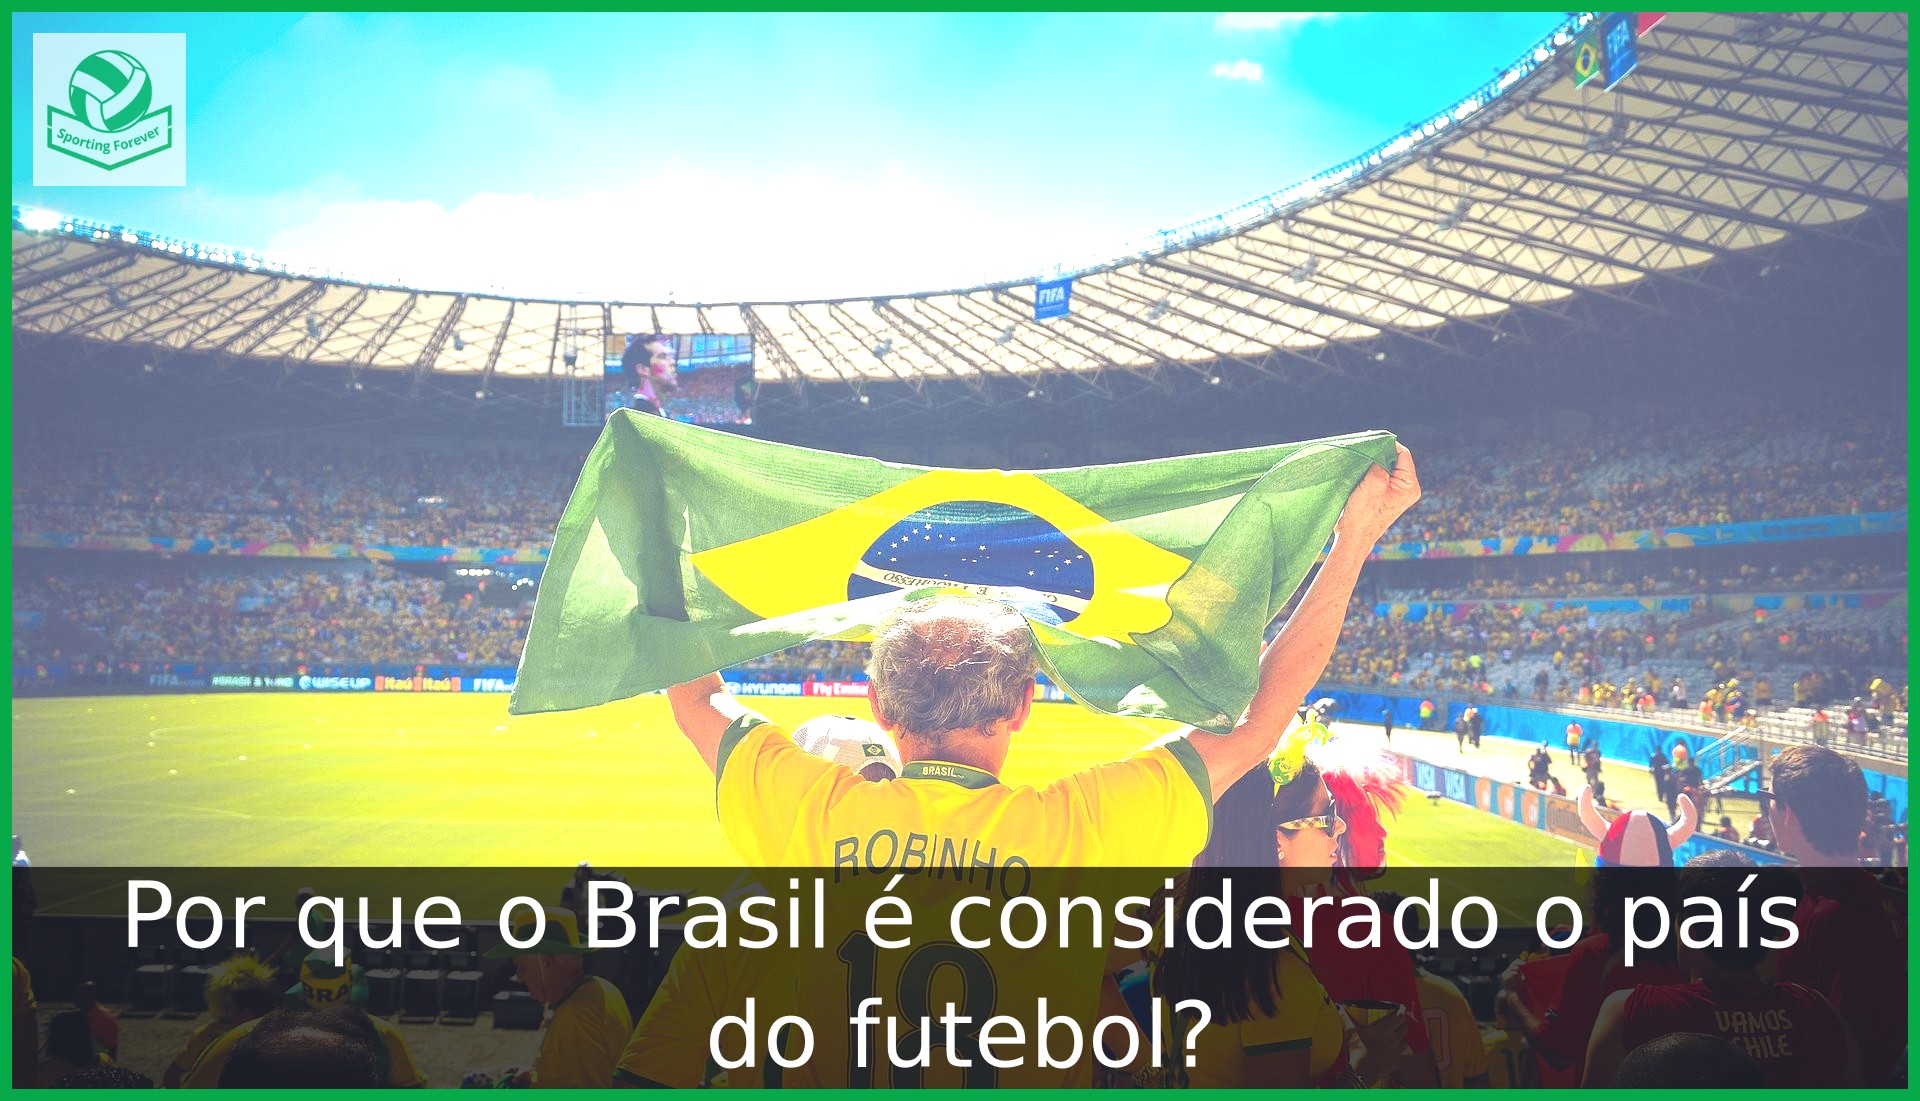 Torcedor levantando a bandeira do Brasil, o país do futebol